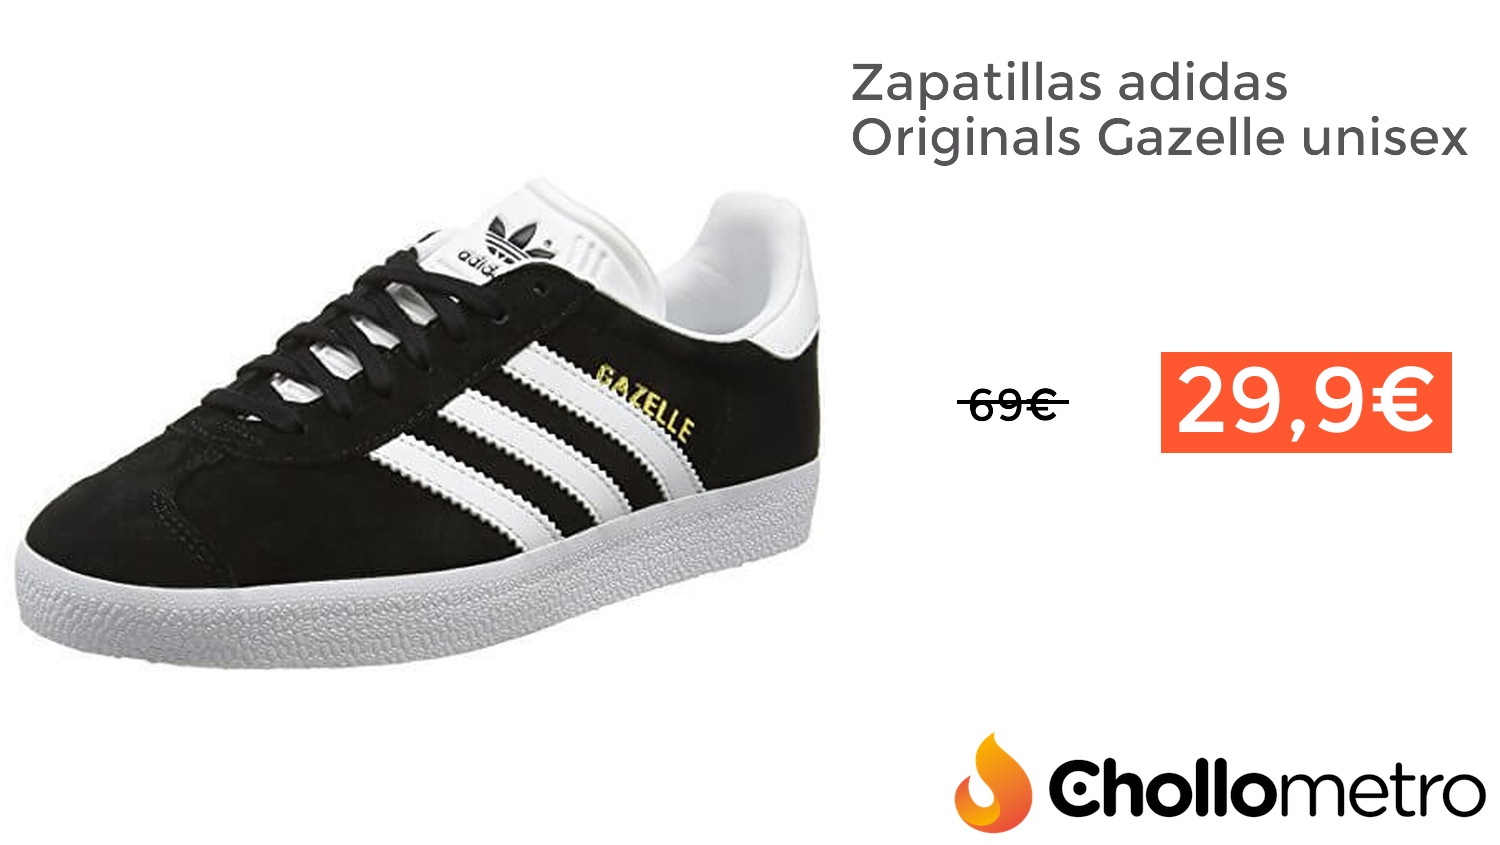 Chollometro on Twitter: "#CHOLLO Zapatillas adidas Originals Gazelle unisex por ➡️ https://t.co/scfElixjpg" / Twitter